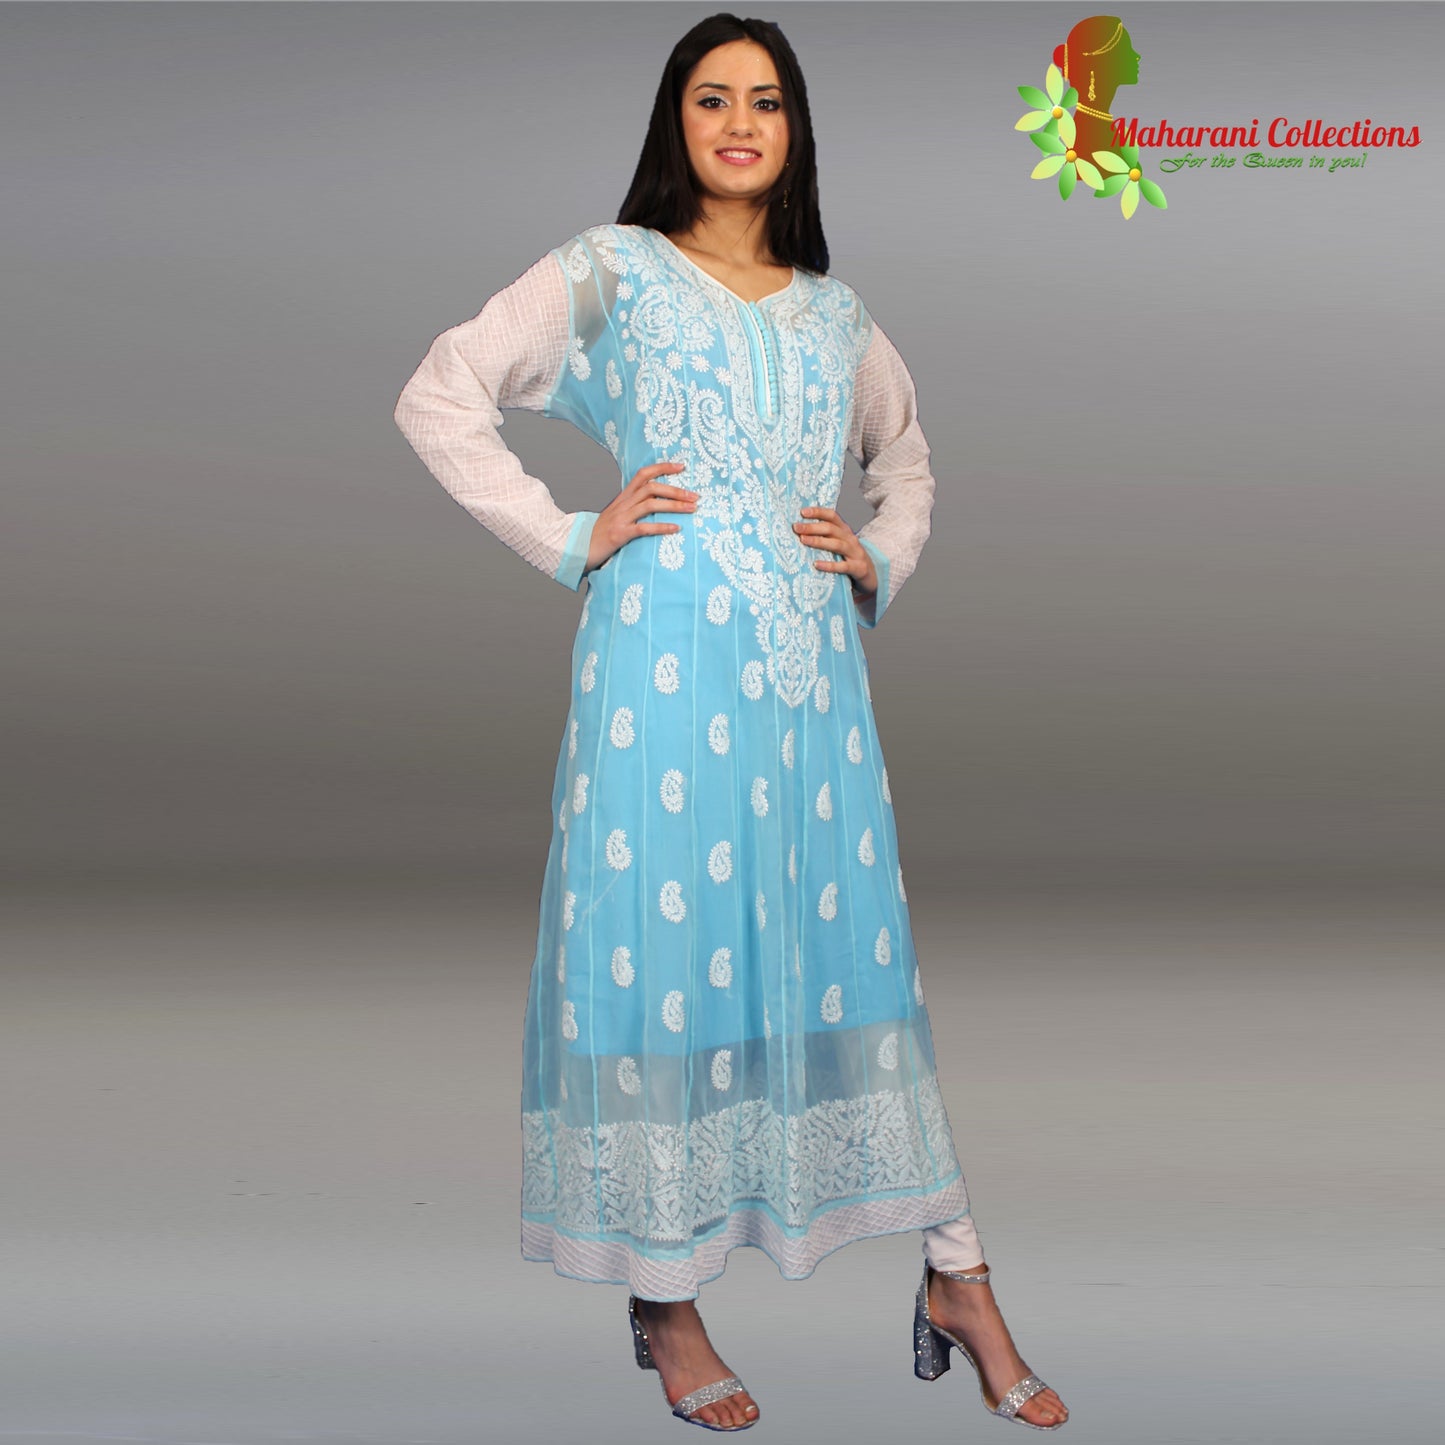 Maharani's Lucknowi Chikankari Anarkali Suit - Light Blue (XL)